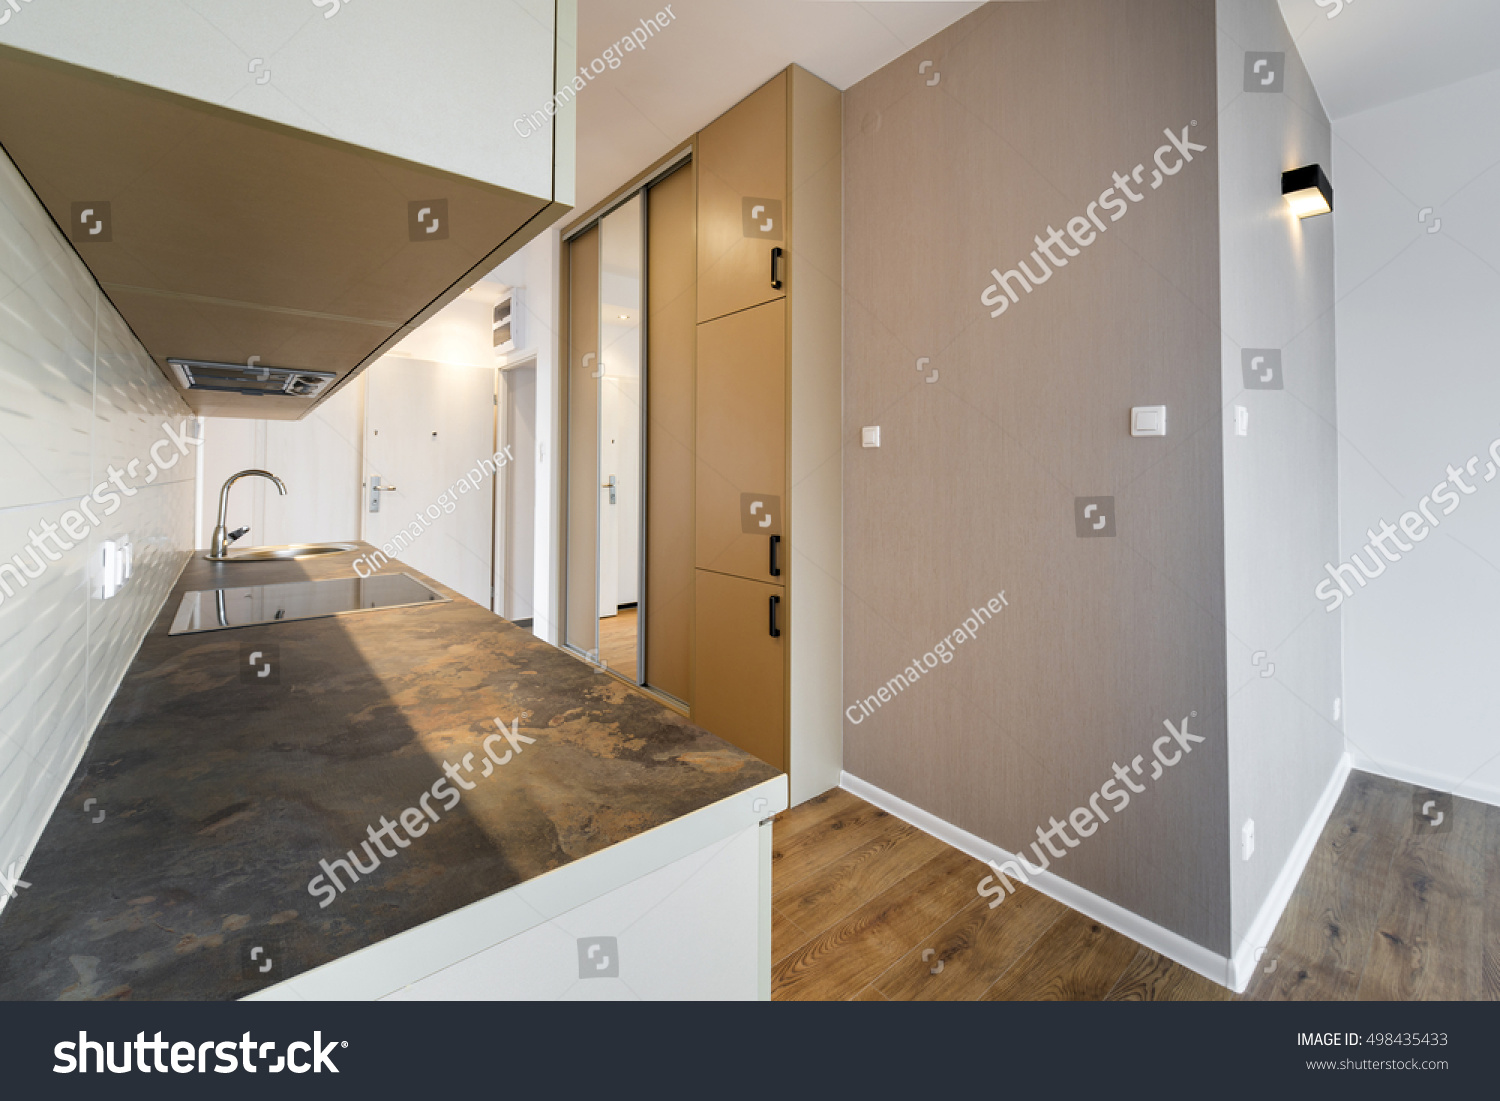 New apartment, empty with domestic kitchen interior design #498435433